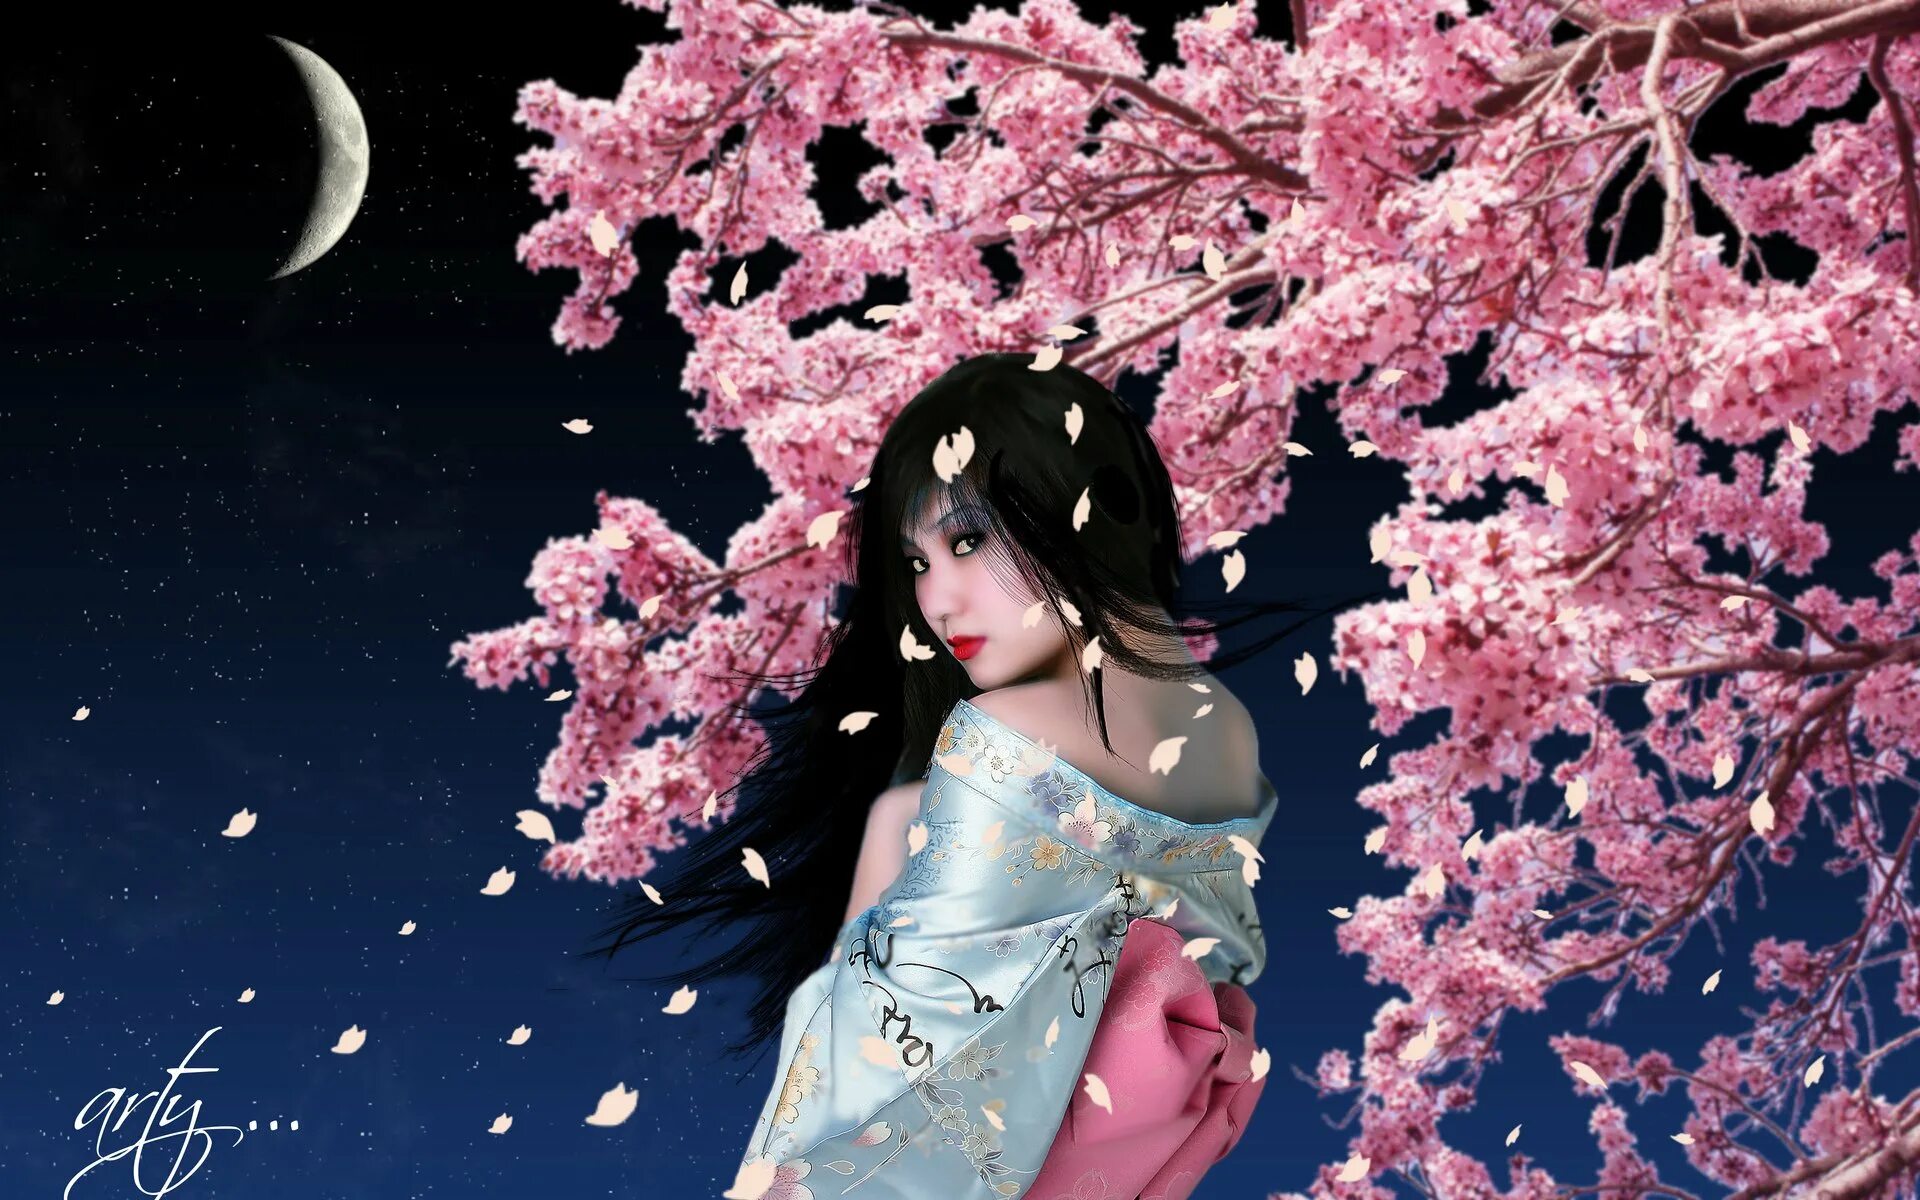 Сакуры человека. Девушка под сакурой. Фотосессия с сакурой. Сакура на фоне Луны. Красивая девушка на фоне Сакуры.